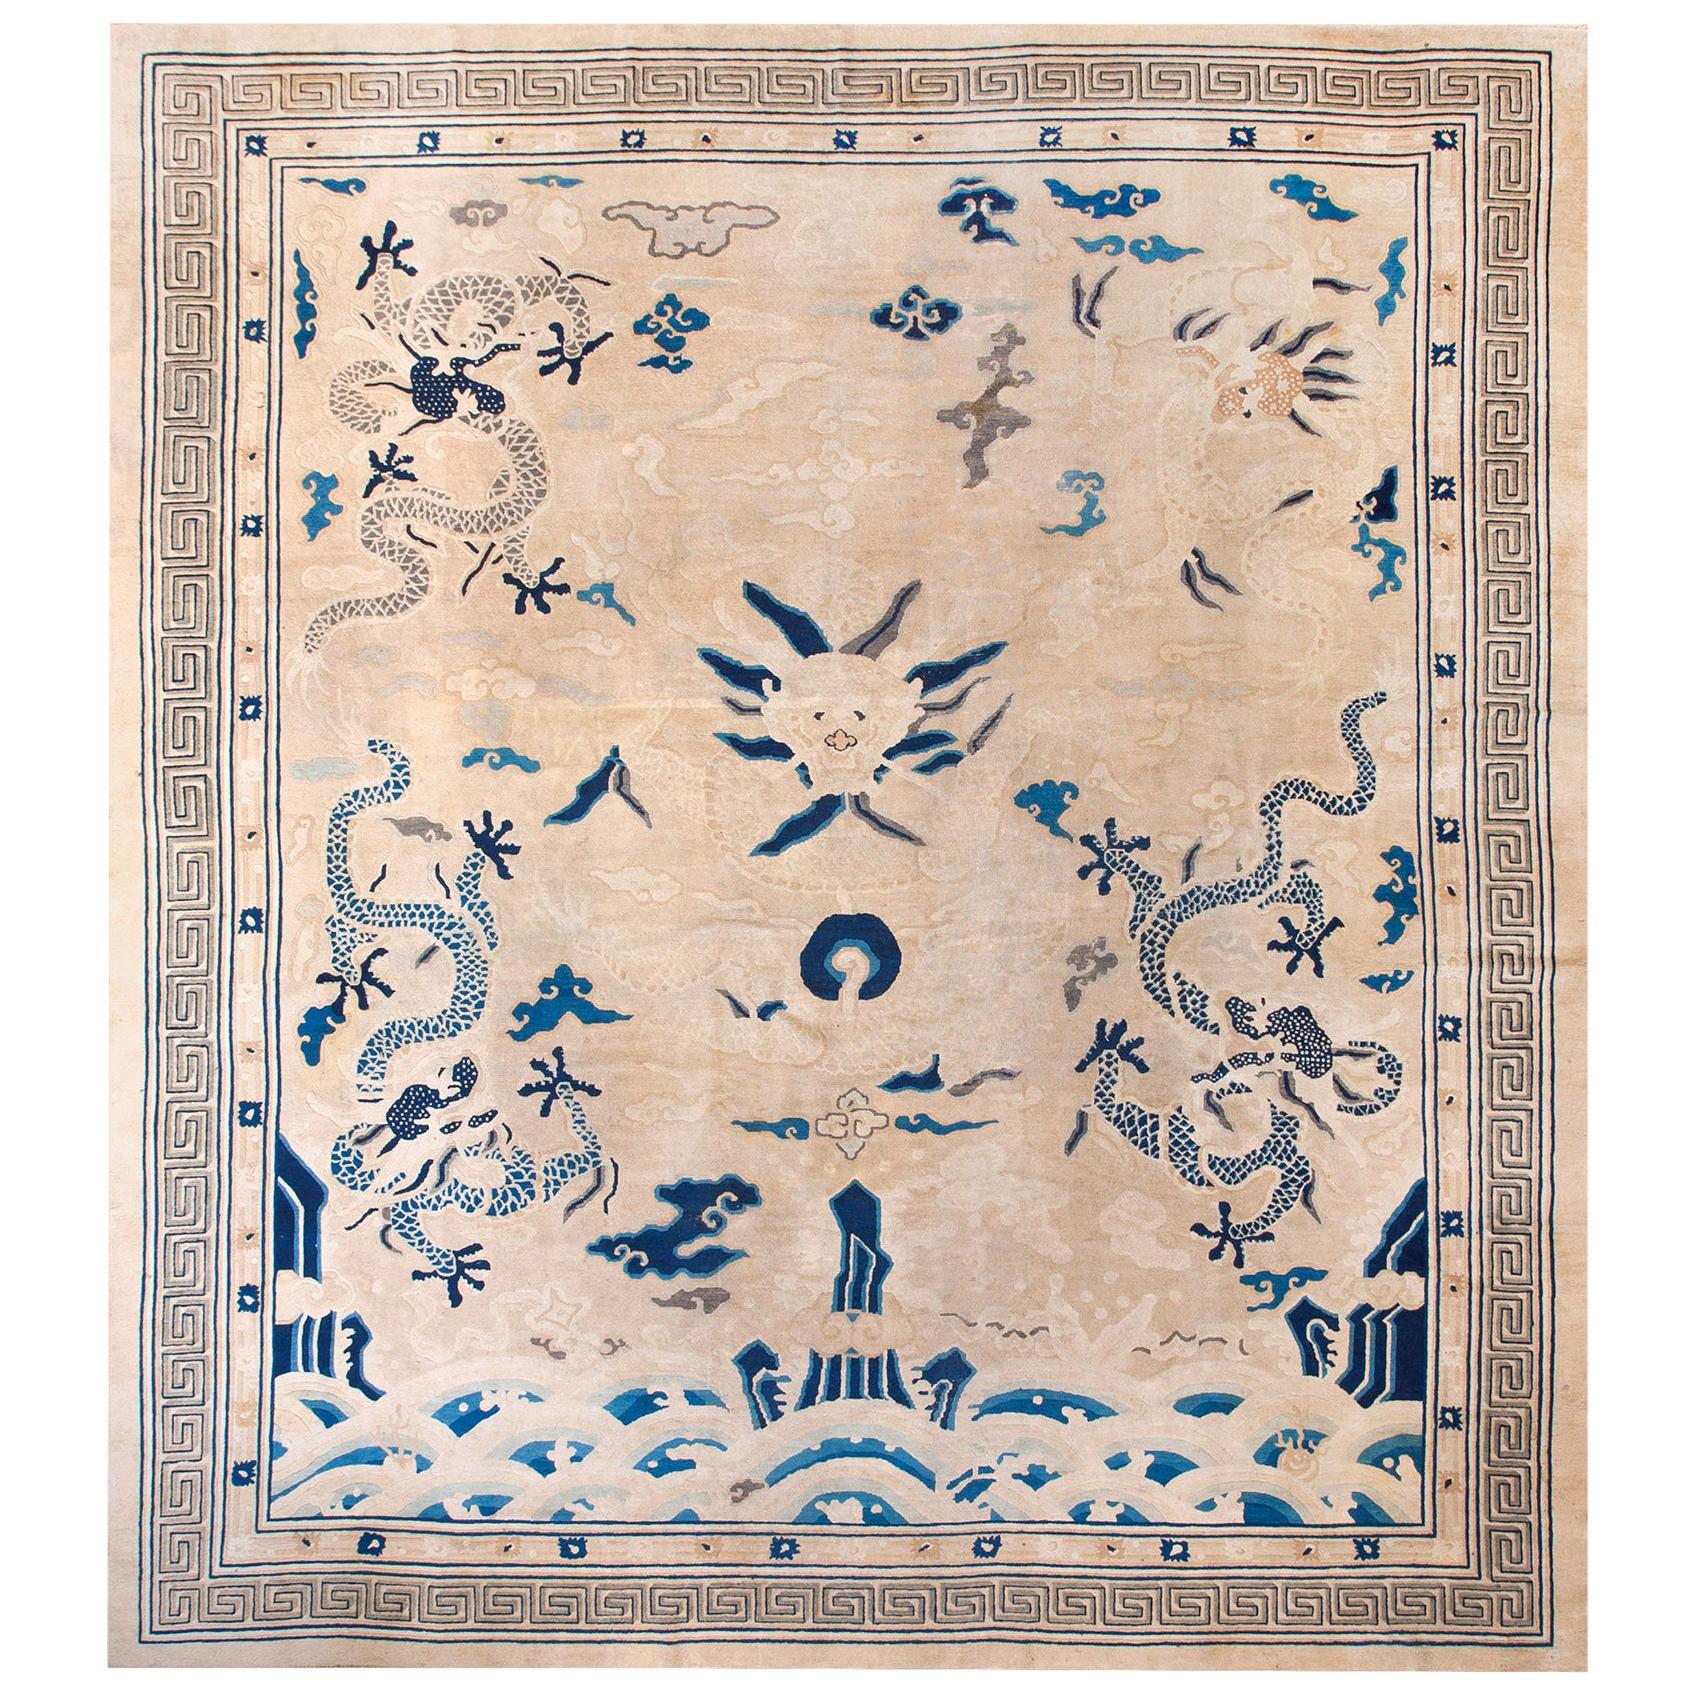 19th Century Chinese Peking Dragon Carpet ( 11'10" x 12'6" - 360 x 380 ) For Sale